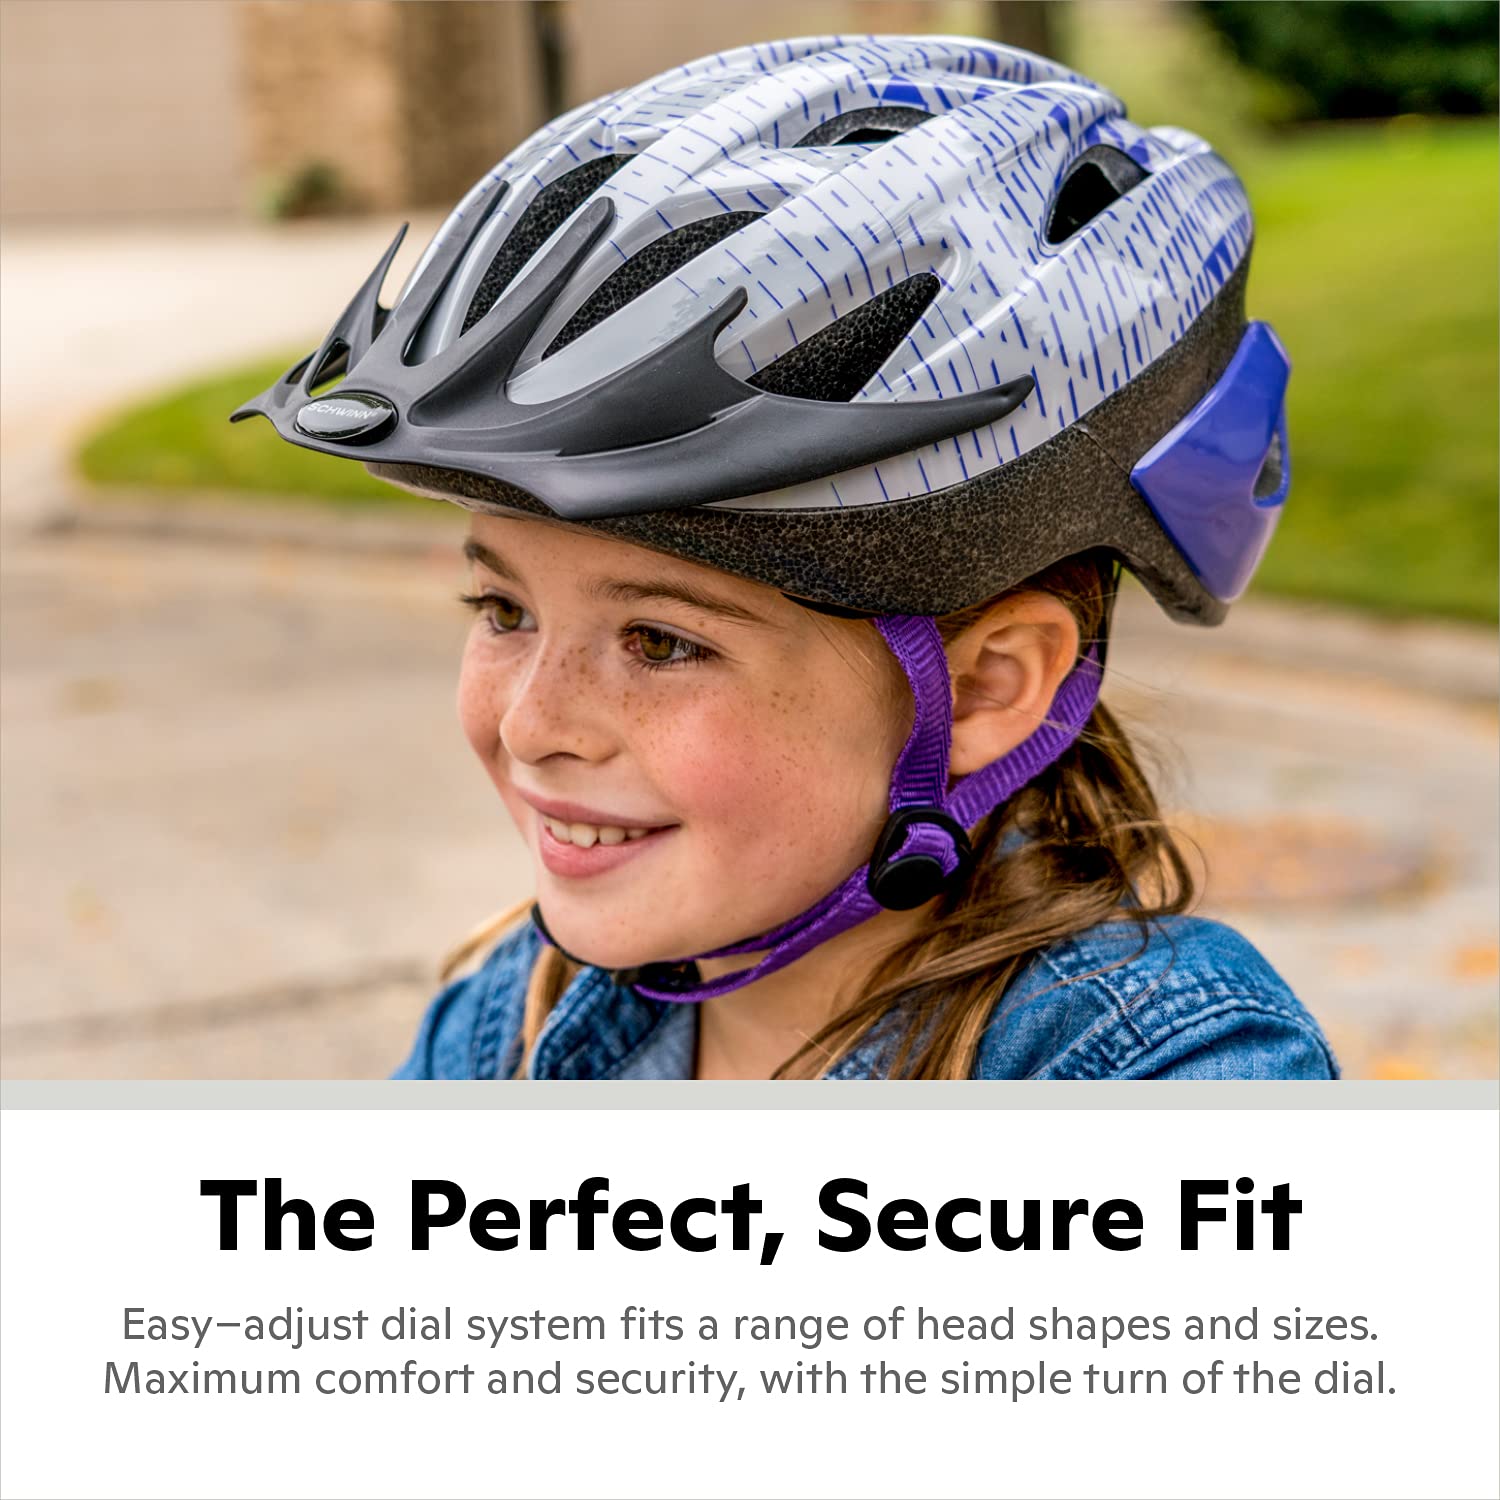 Schwinn Thrasher Kids Bike Helmet, Boys and Girls, Fits 50-54cm Circumference, Ages 5-8 Year Olds, Lightweight, Detachable Visor, CPSC Safety Certified